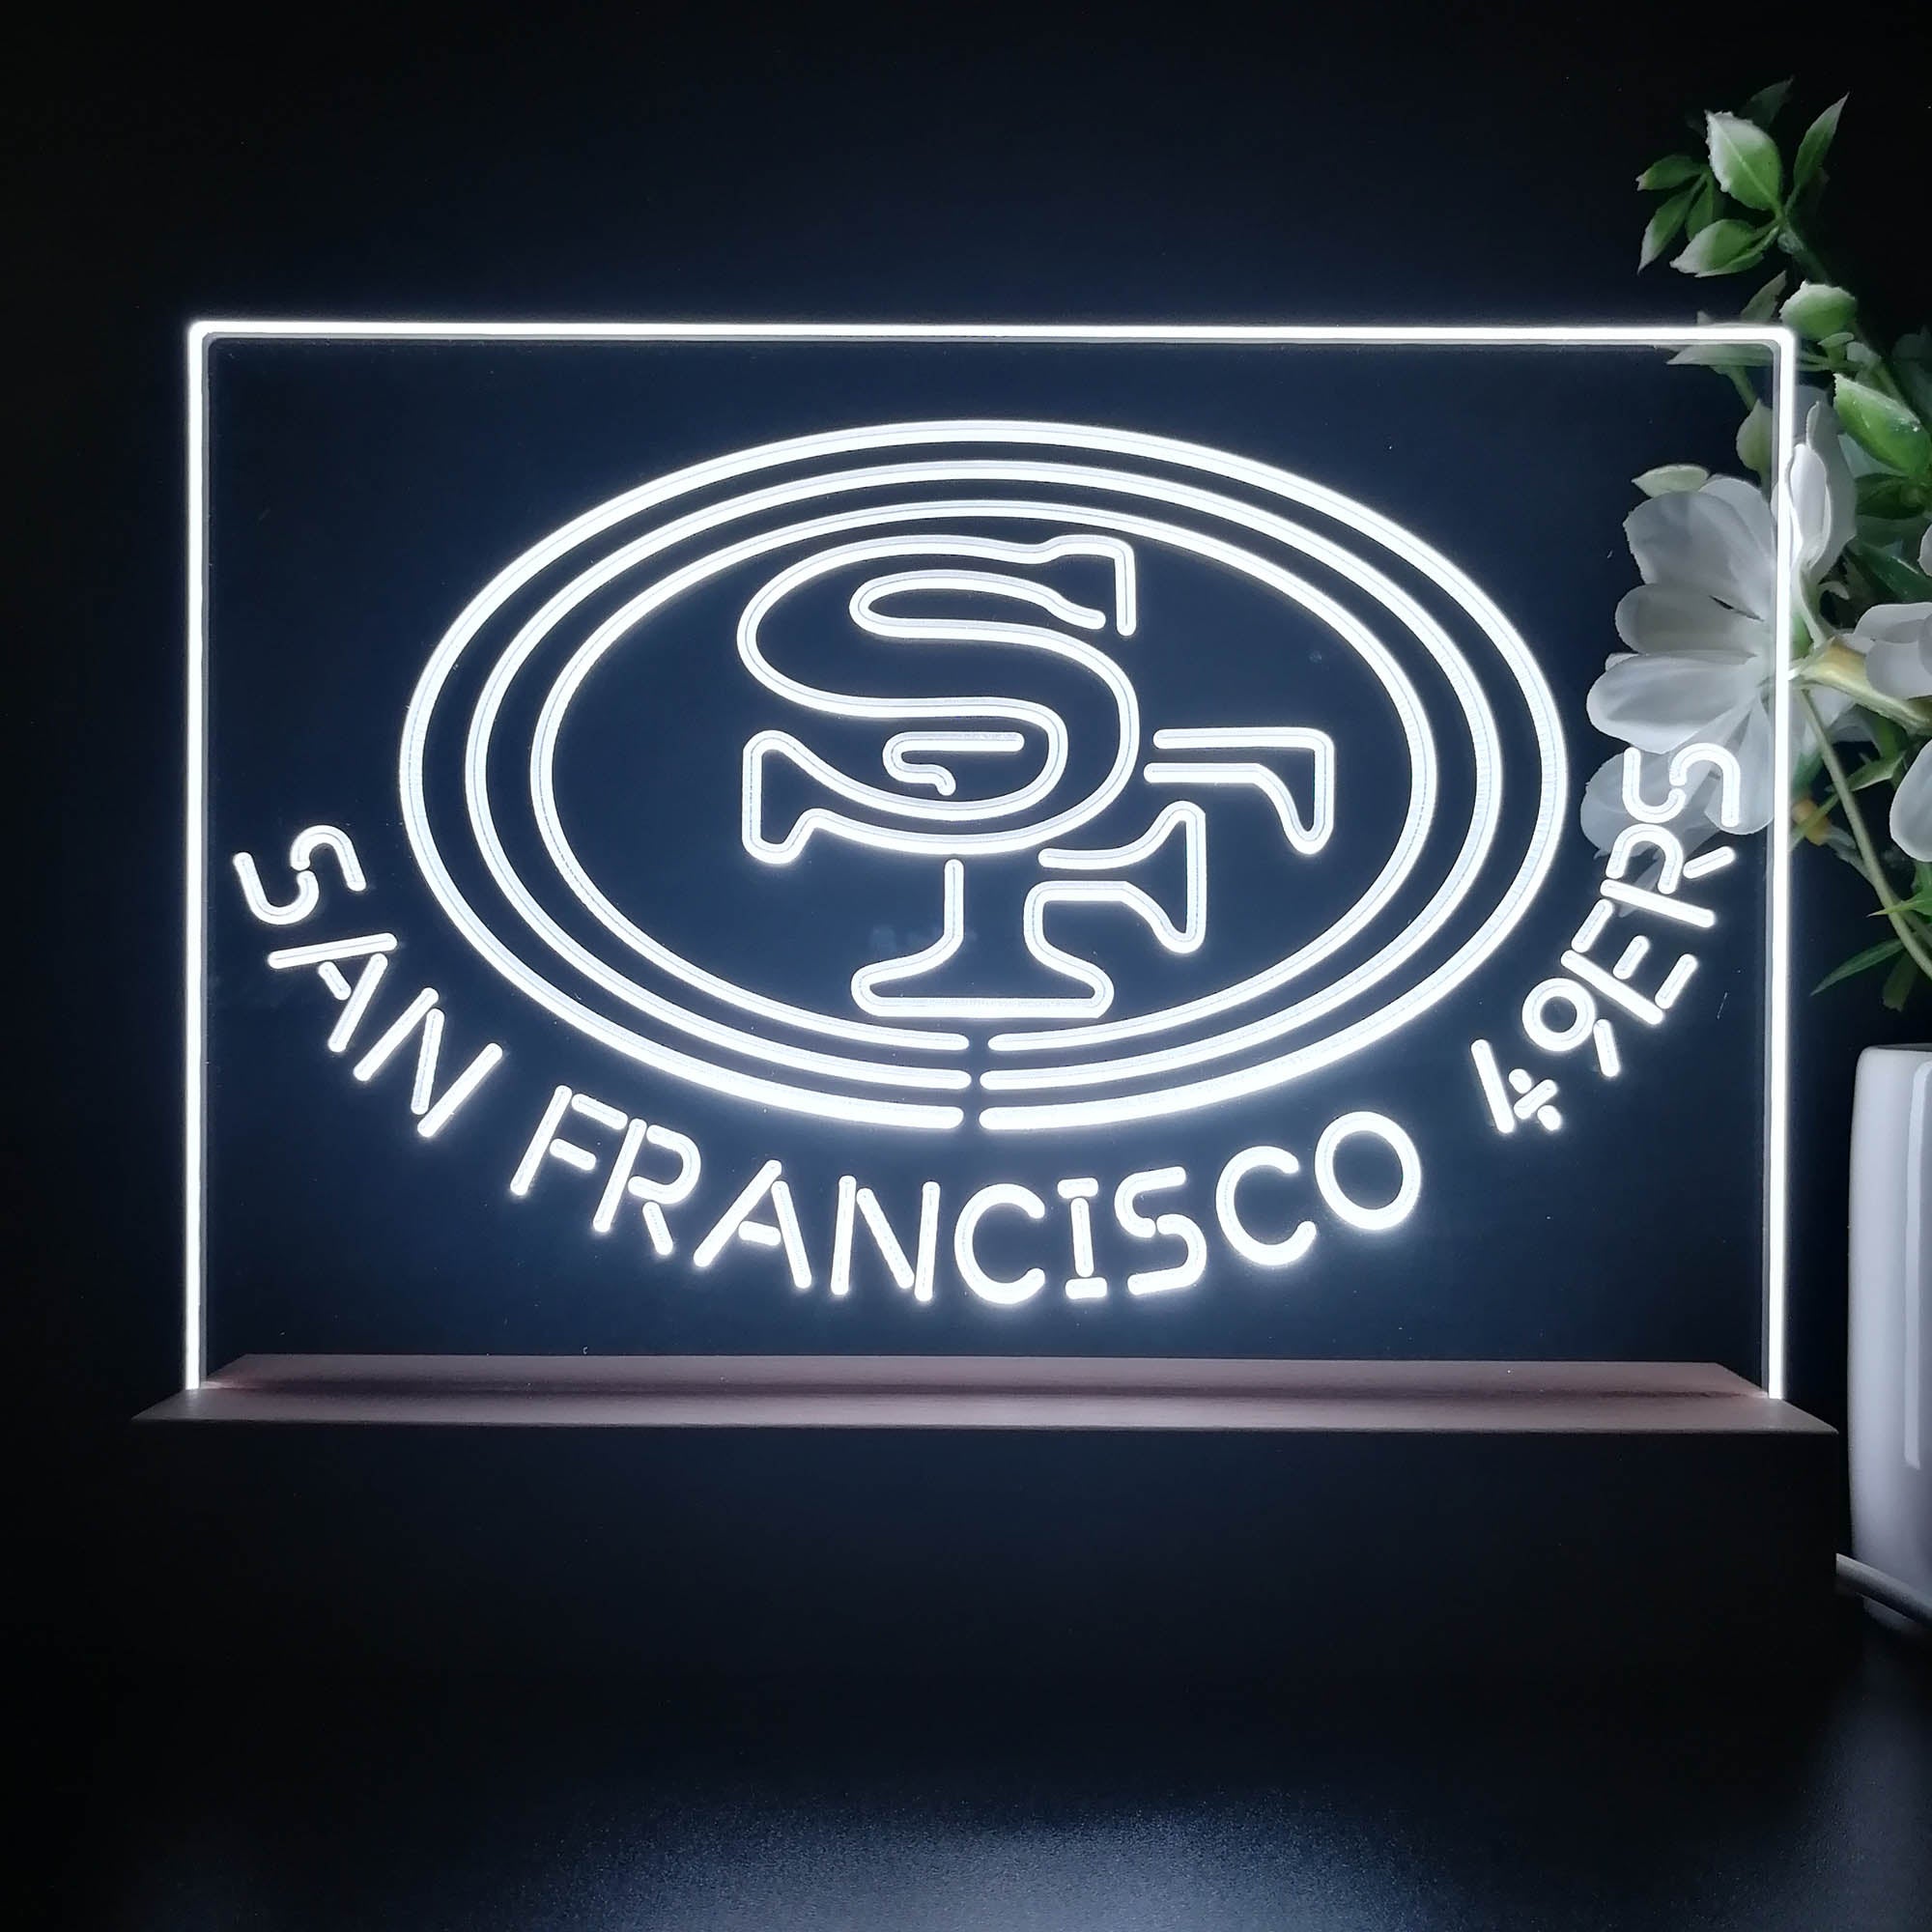 San Francisco 49ers Neon Sign Pub Bar Lamp